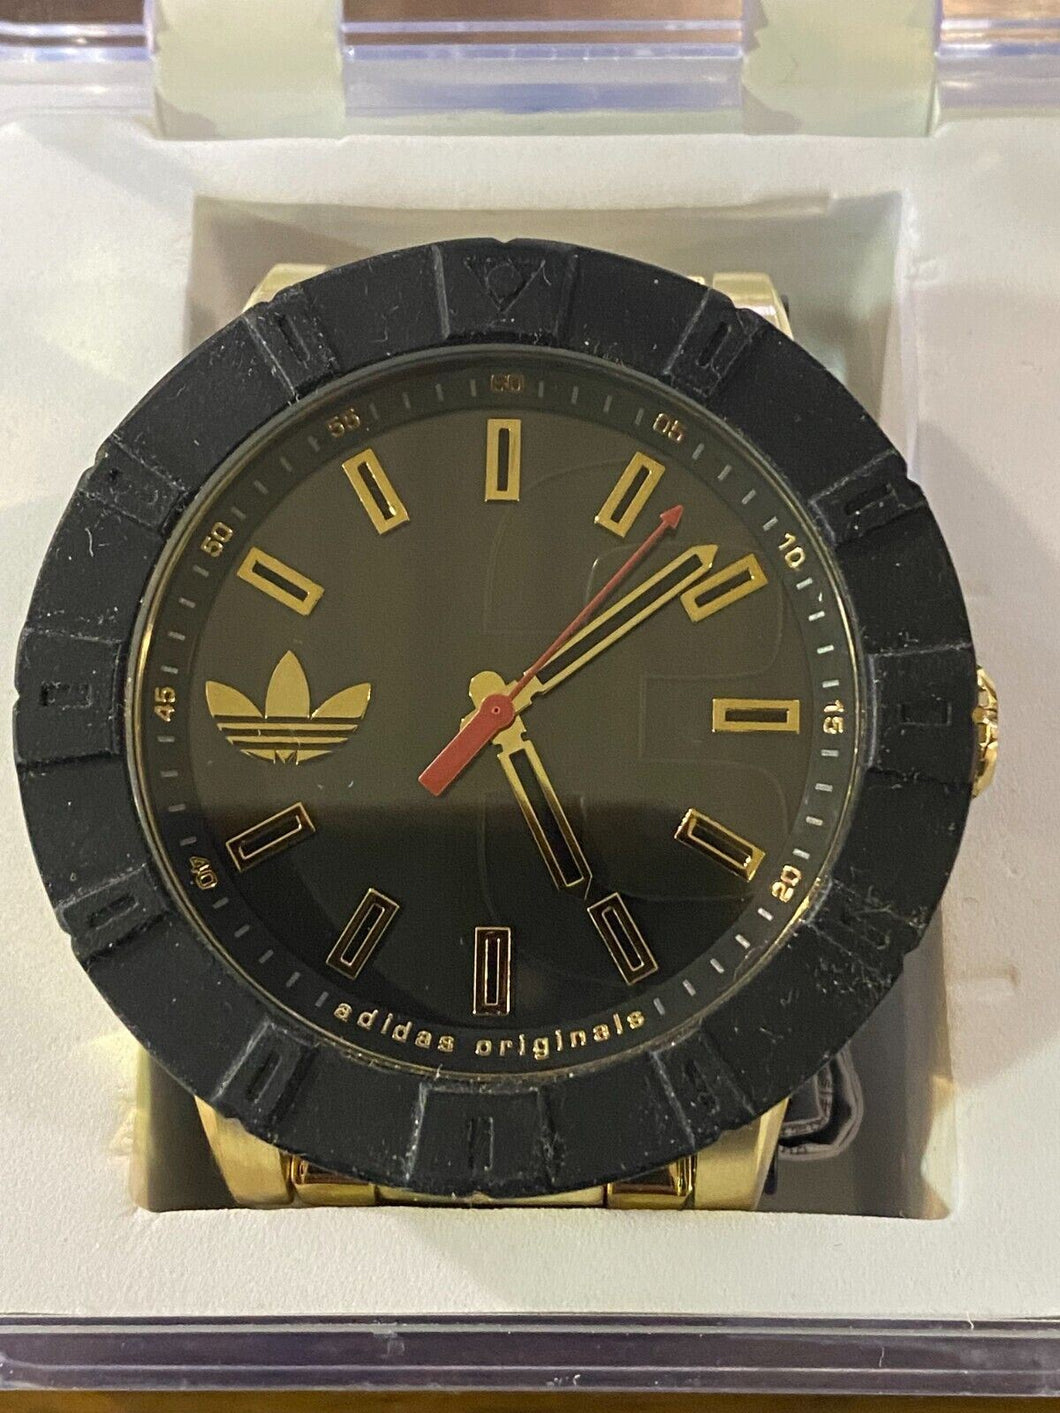 Adidas Originals Gold Amsterdam Mens Watch with original Box